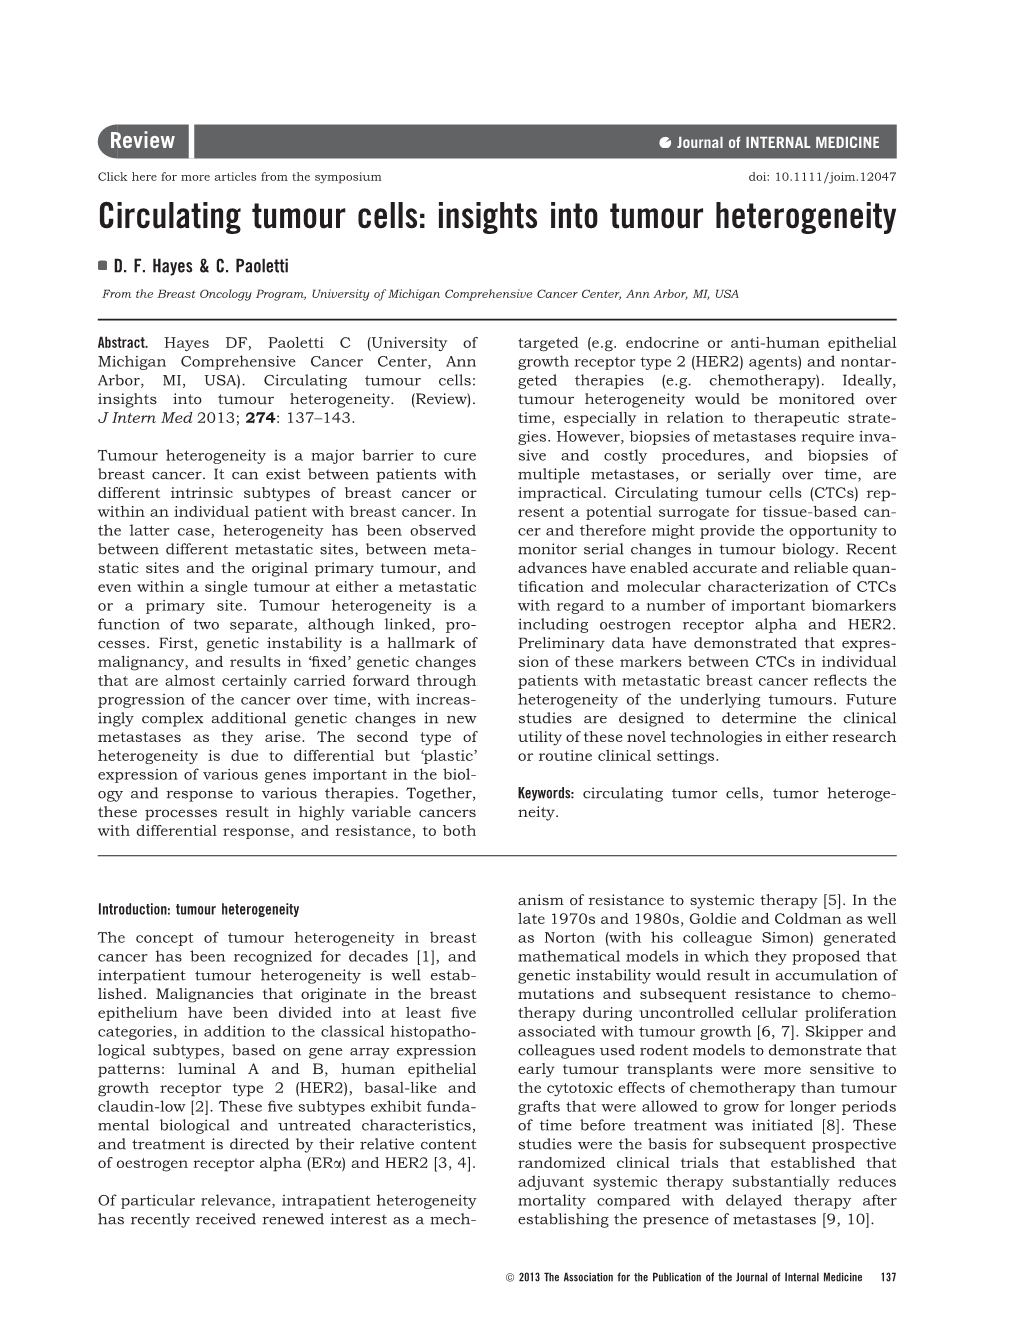 Circulating Tumour Cells: Insights Into Tumour Heterogeneity